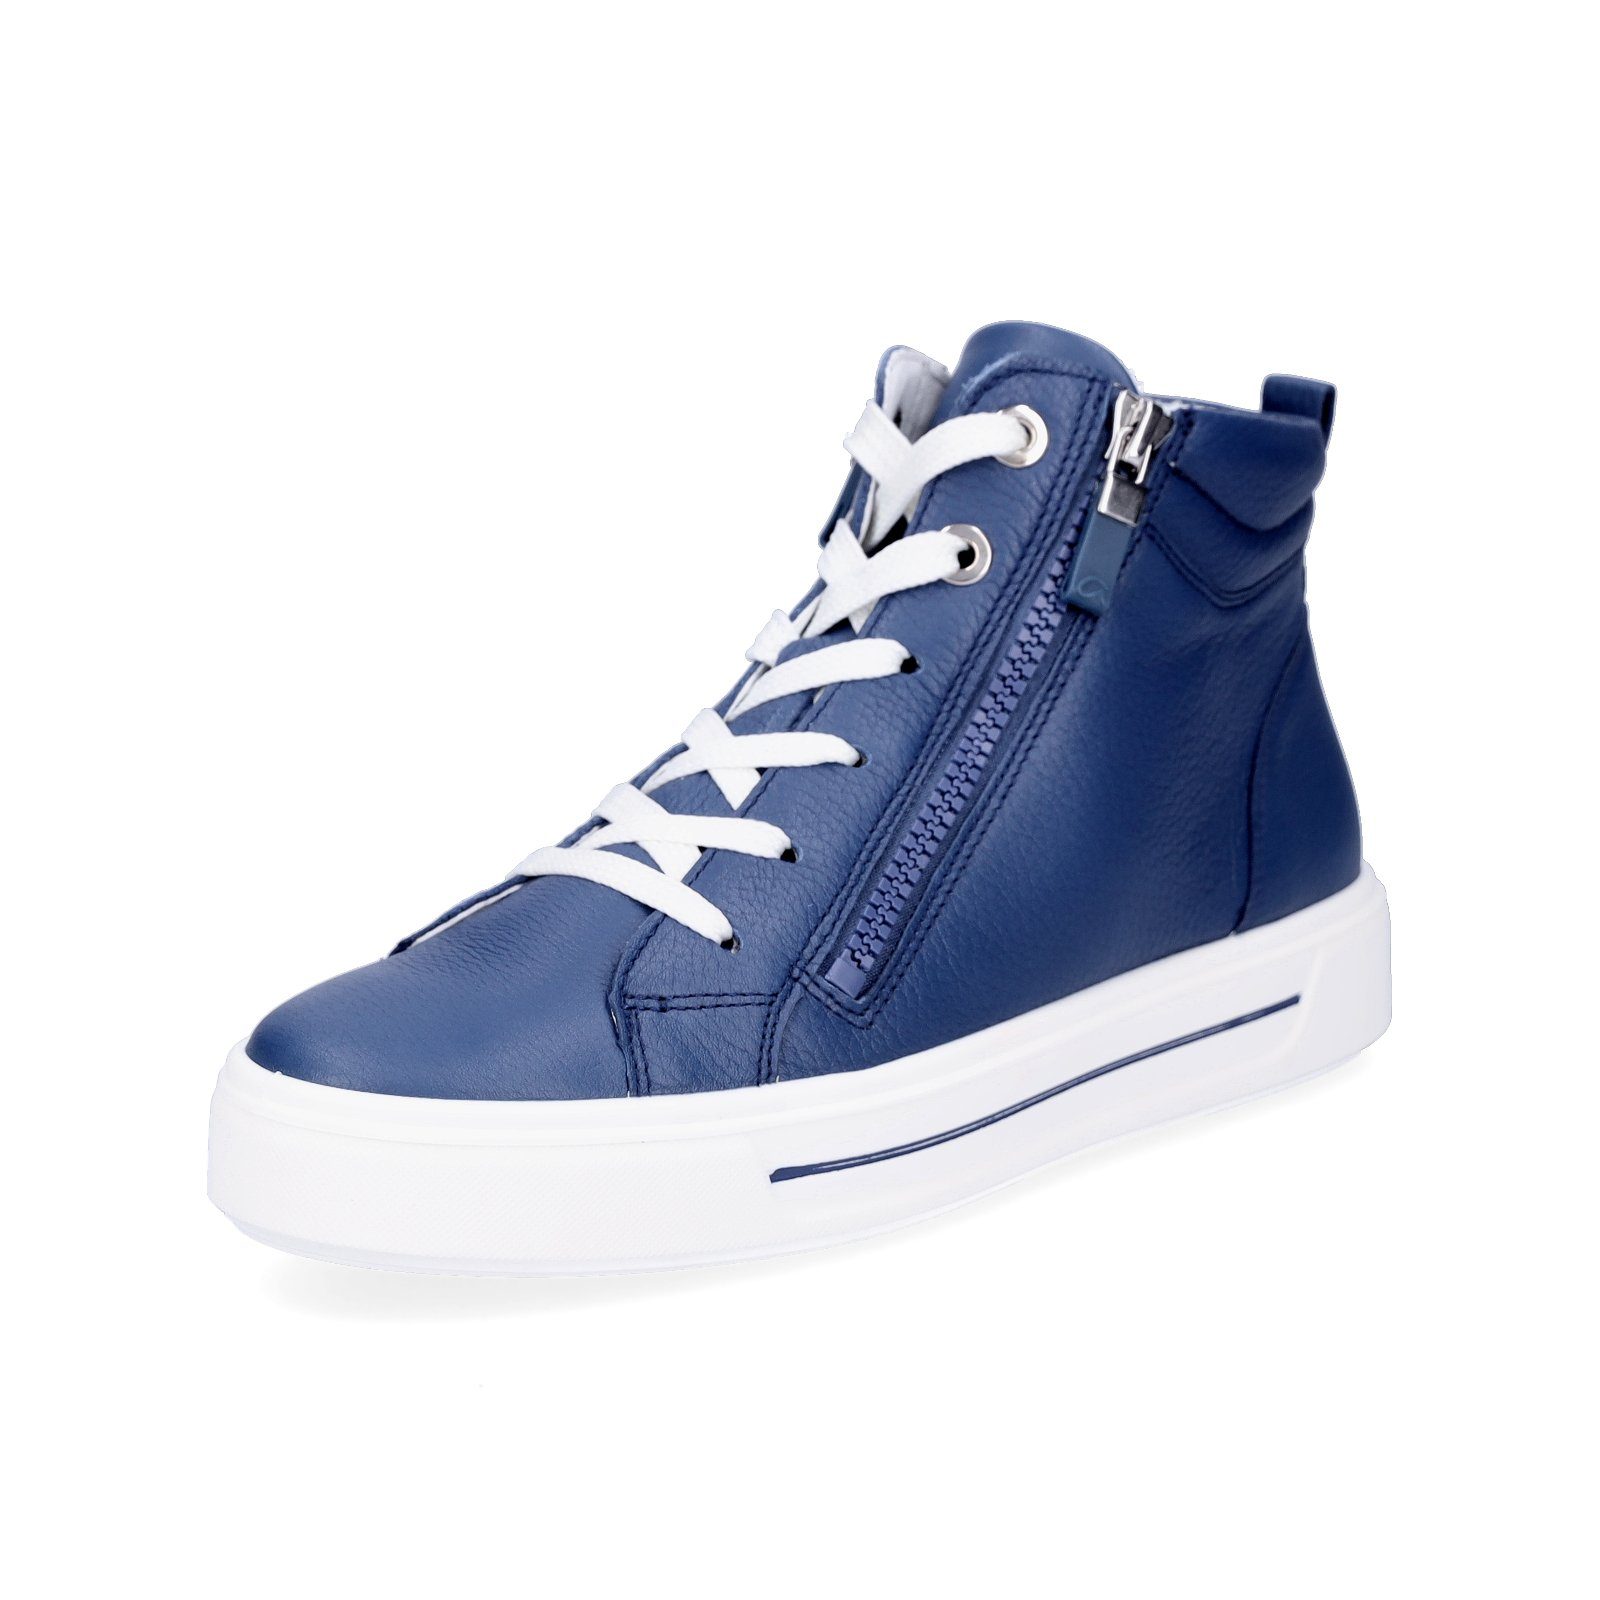 Ara Ara Damen Leder blau Sneaker Sneaker High 048006 blau